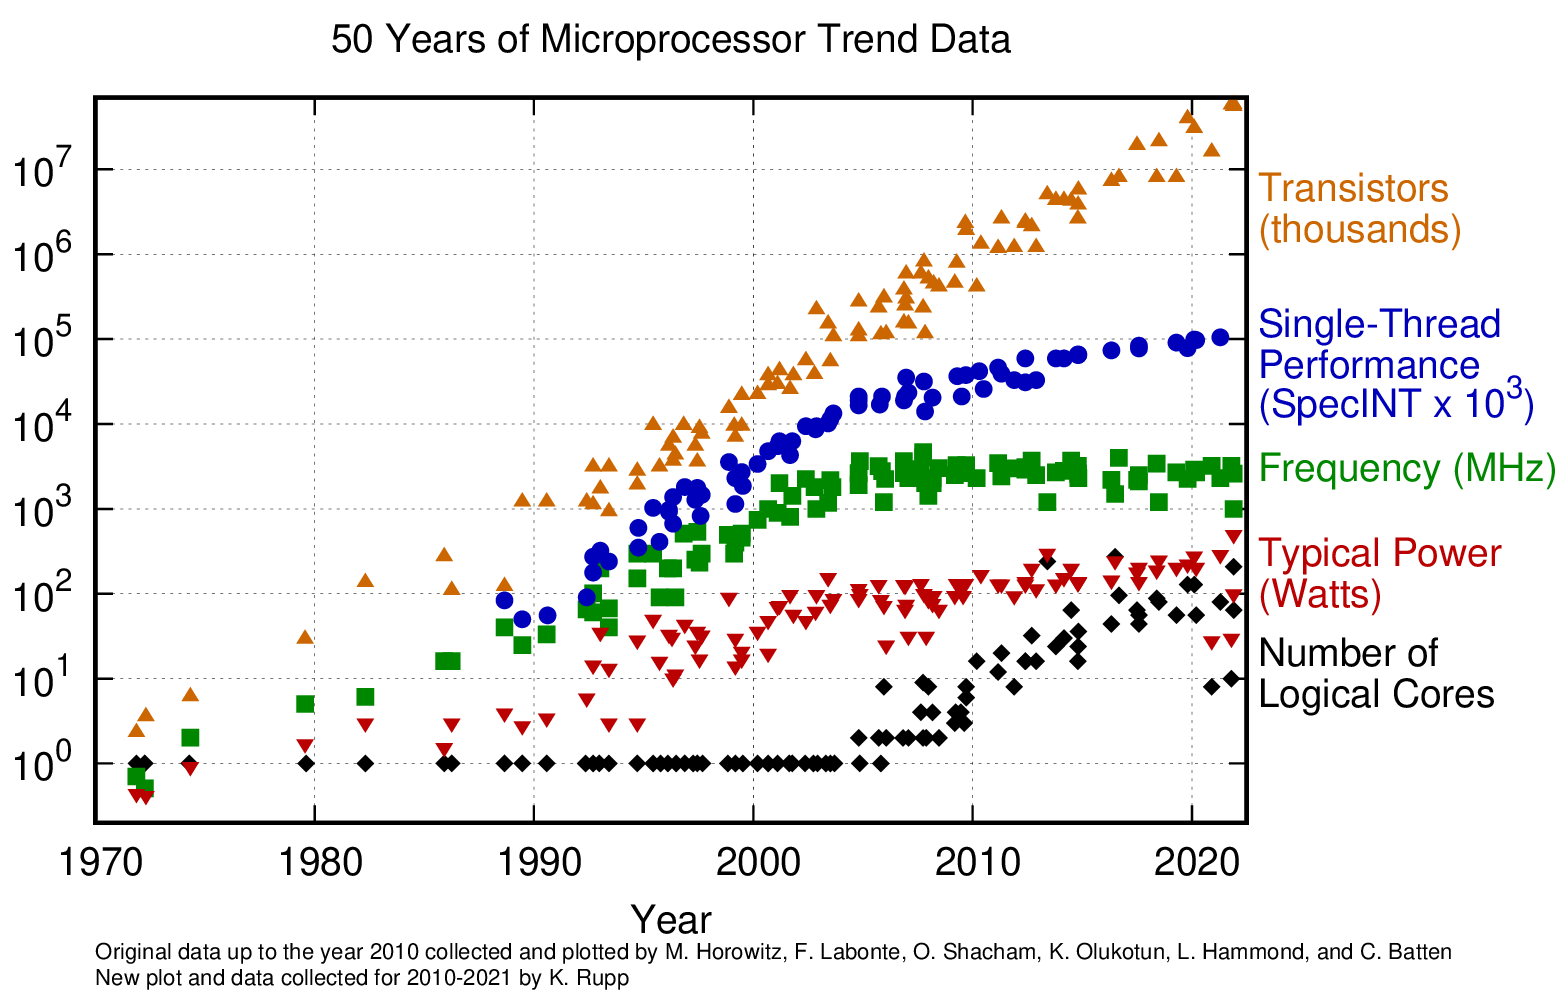 50 Years of Microprocessor Trend Data. *© Image by K. Rupp via karlrupp.net*